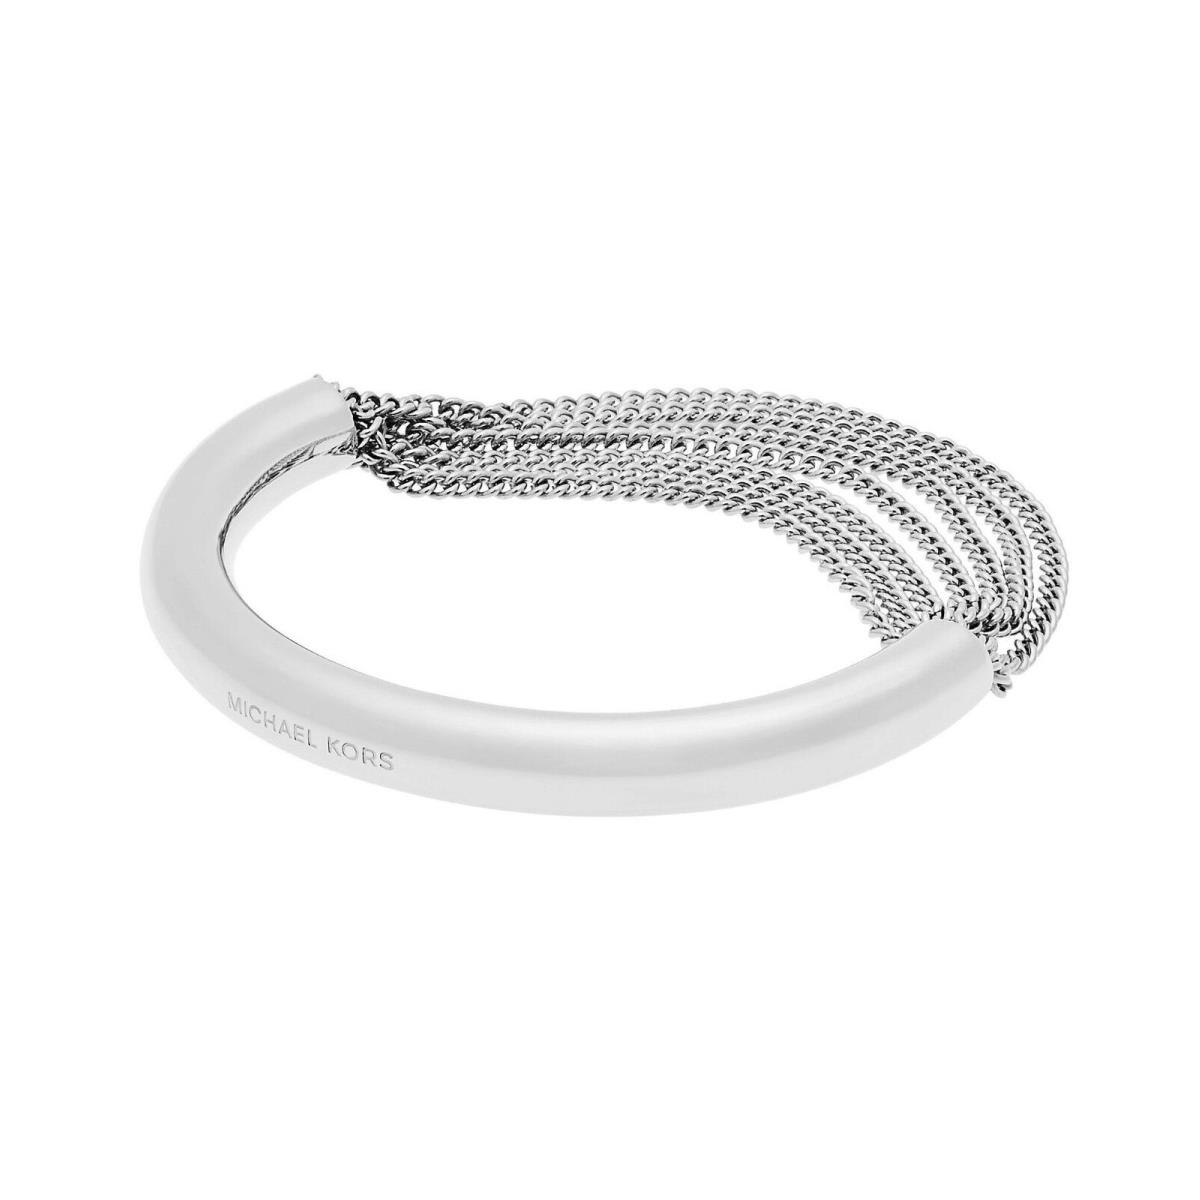 Michael Kors Silver Tone Crystals Fringe Draped Chains Bracelet MKJ5788